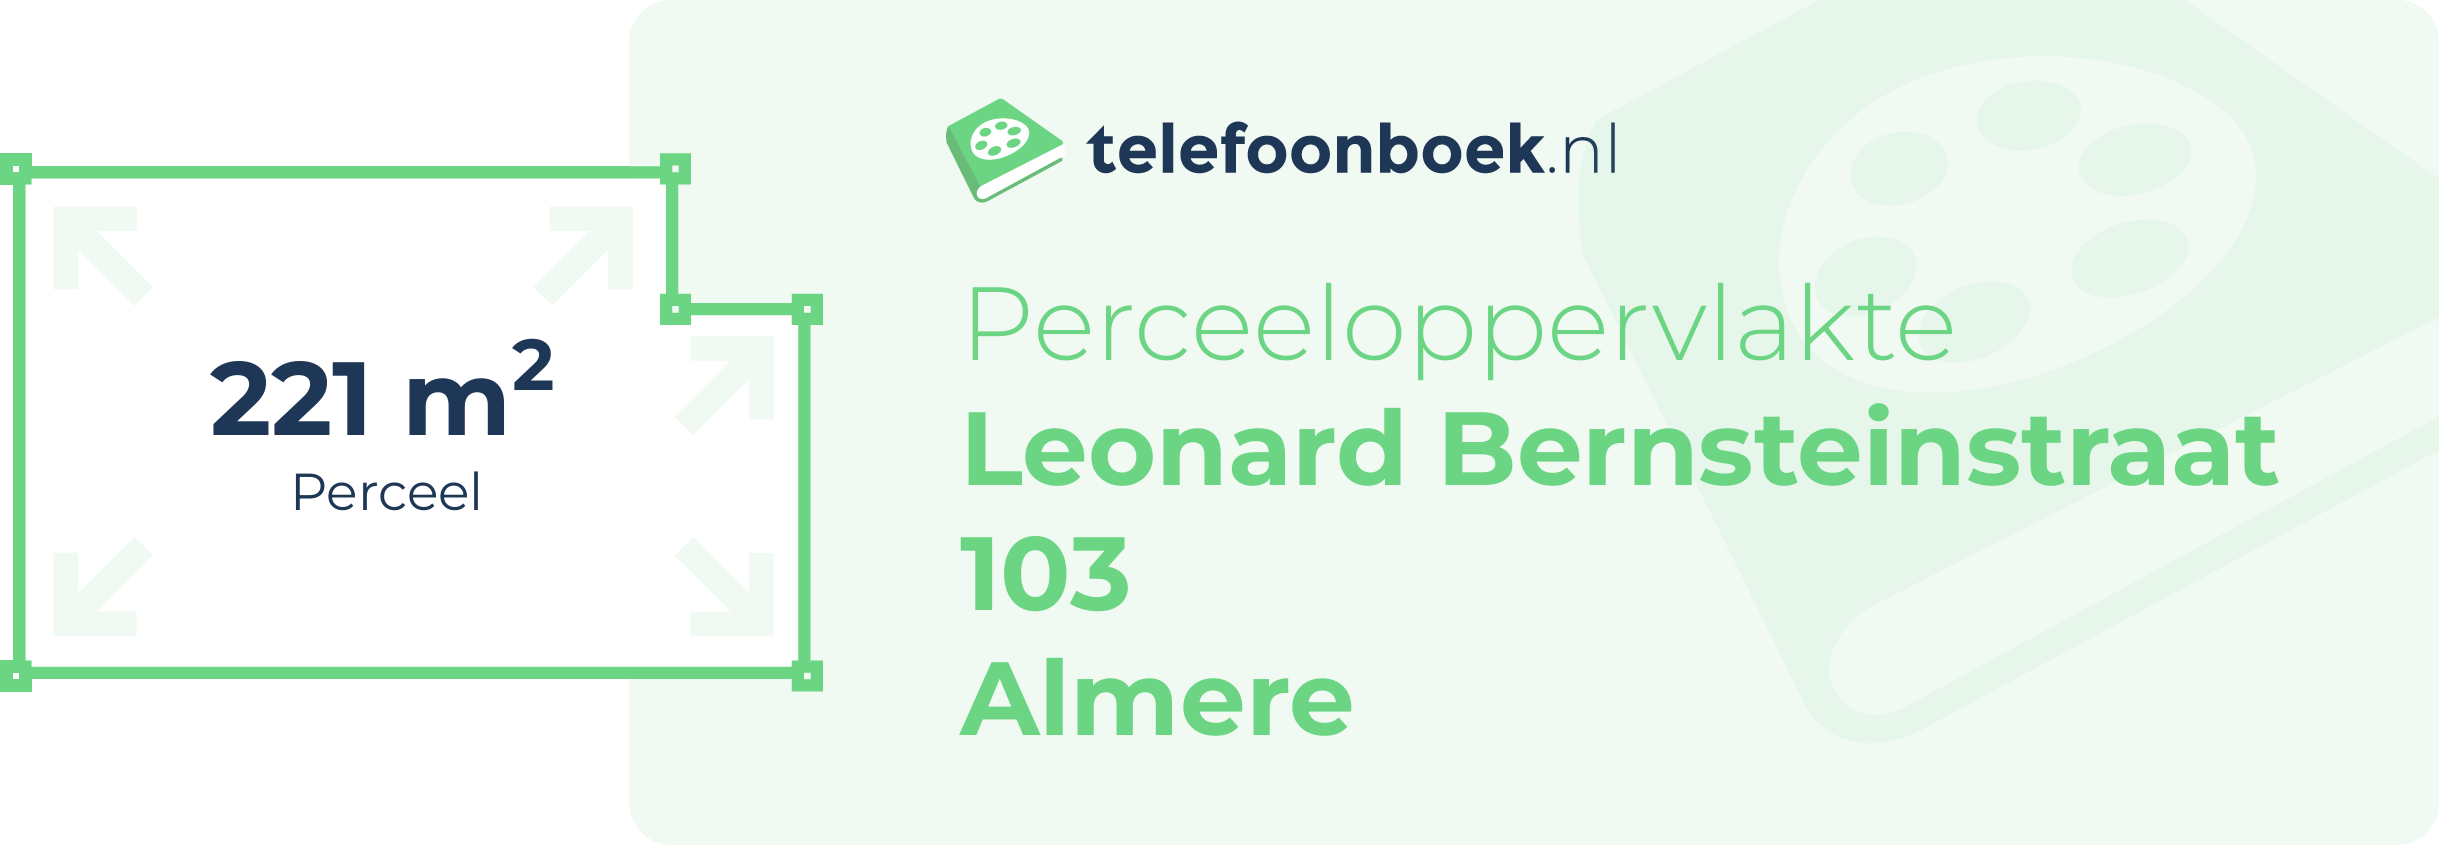 Perceeloppervlakte Leonard Bernsteinstraat 103 Almere